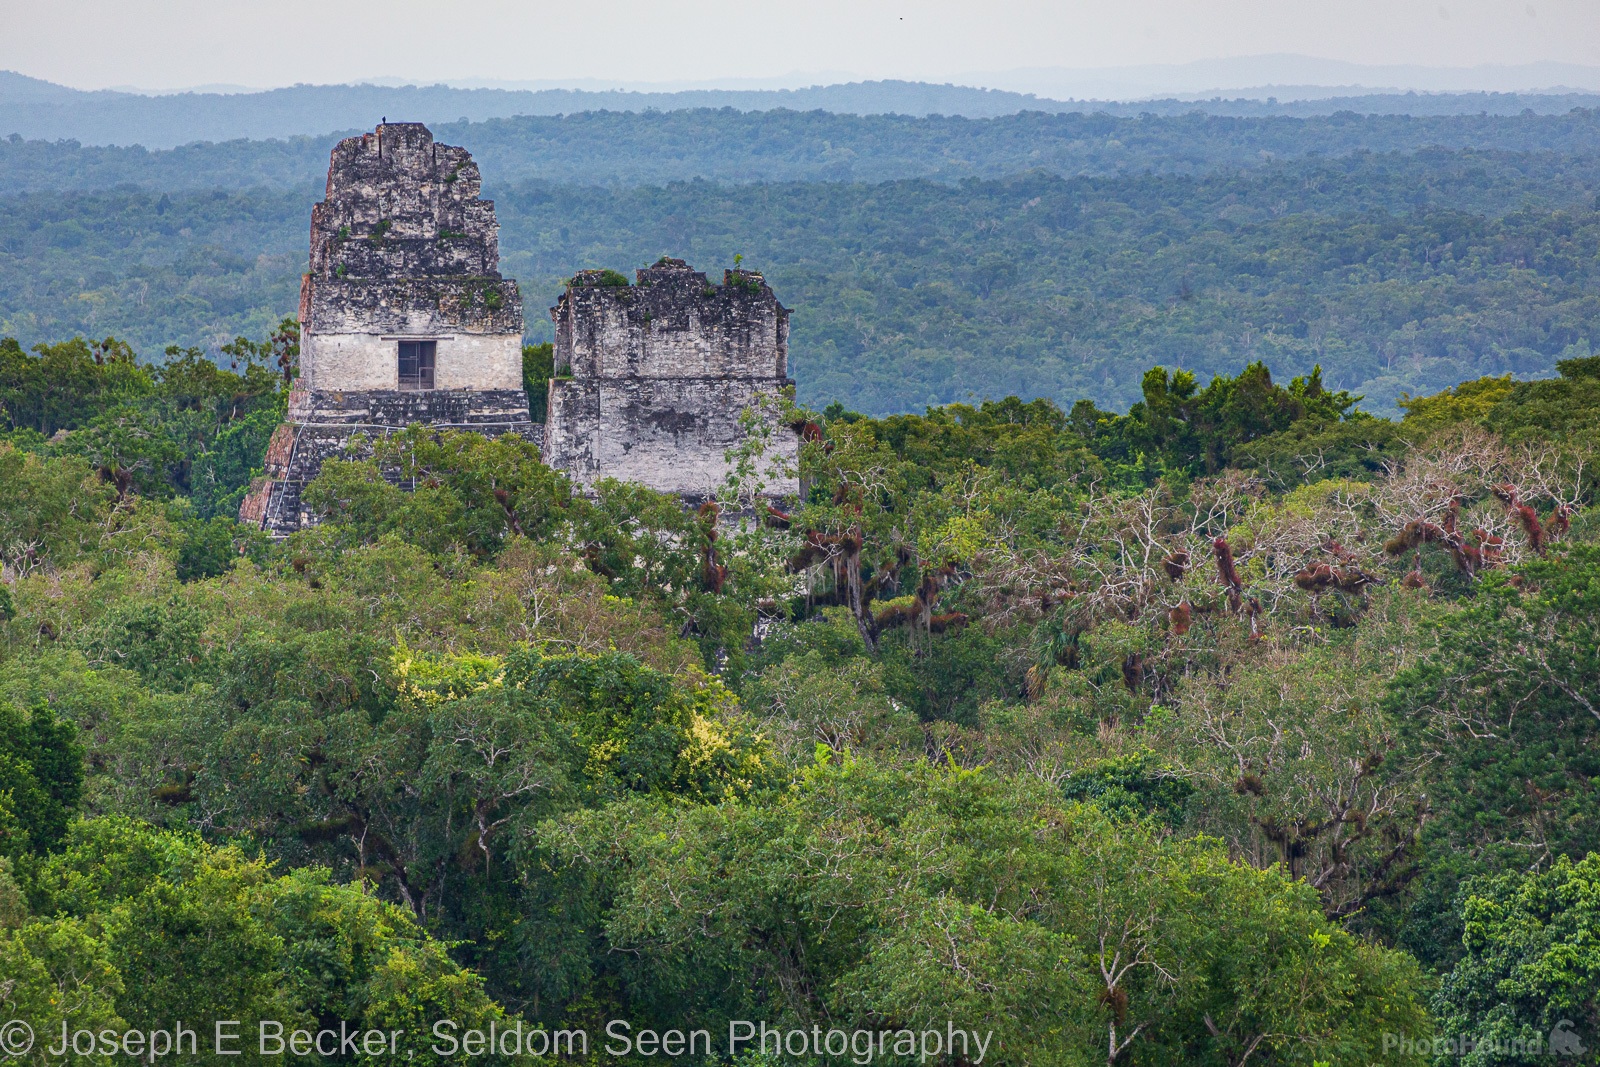 Image of Tikal by Joe Becker